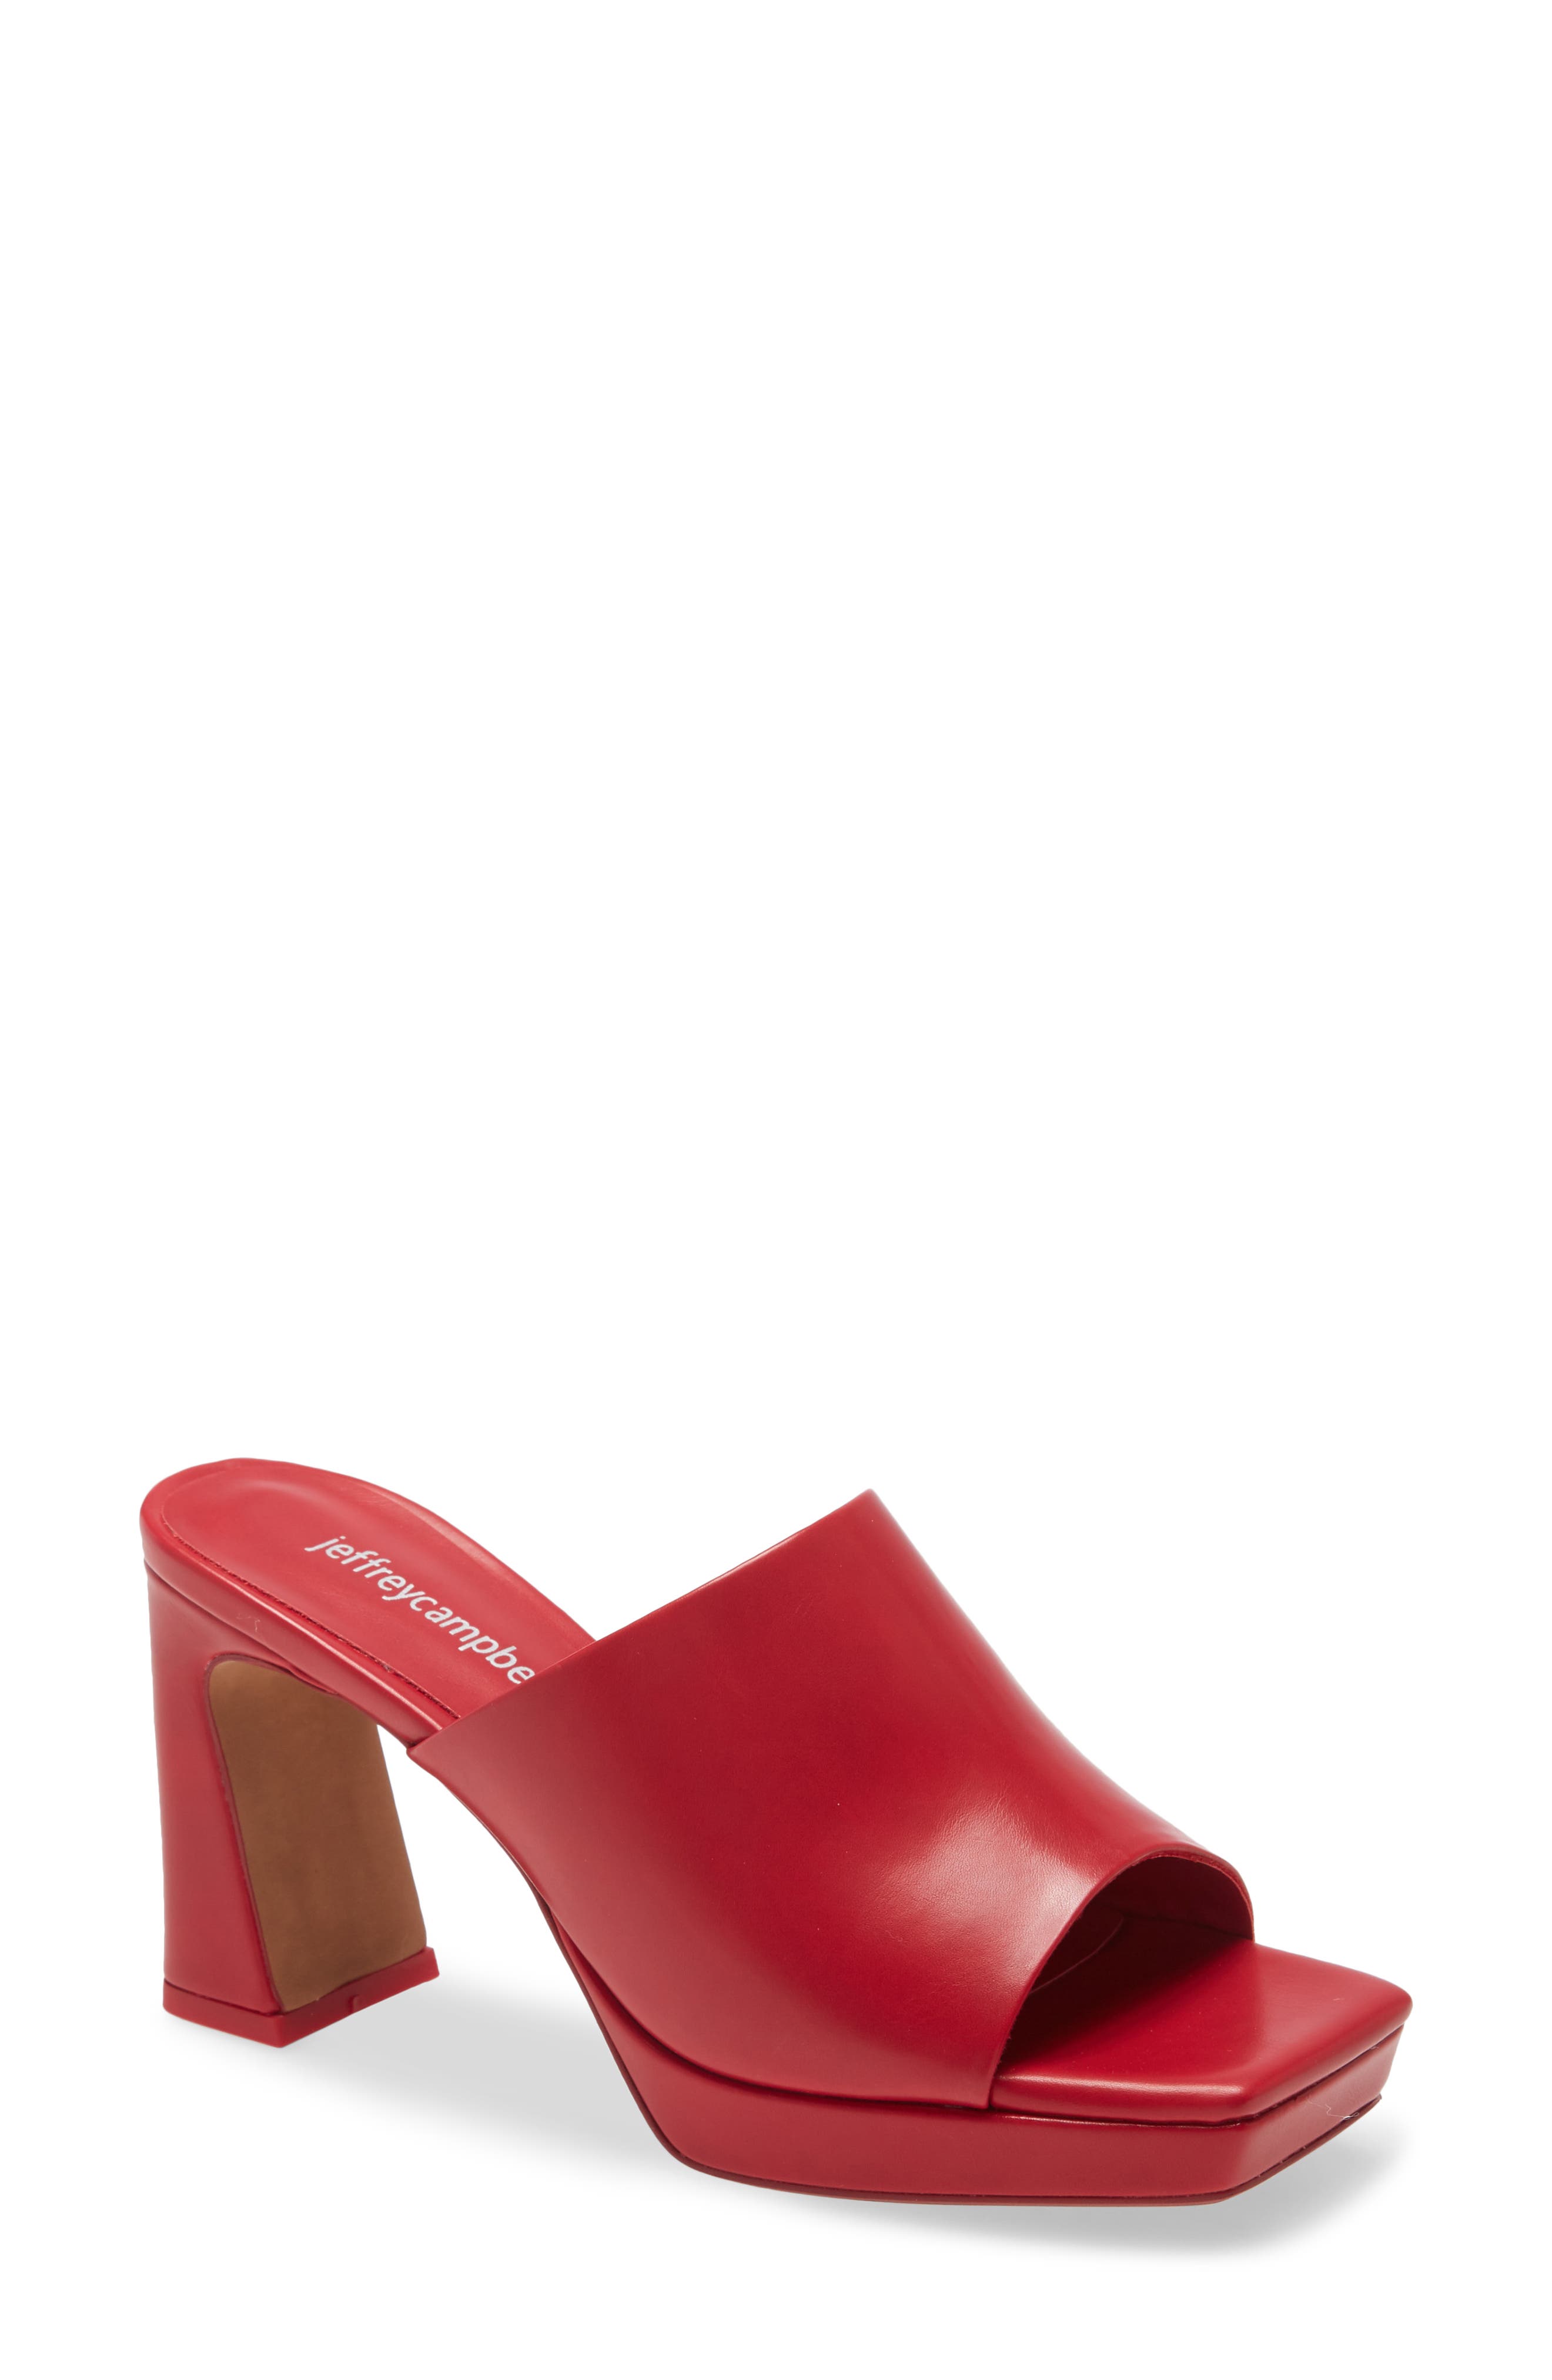 Womens Red Platform Stilleto High Heel Shoe Faux Suede Size 4